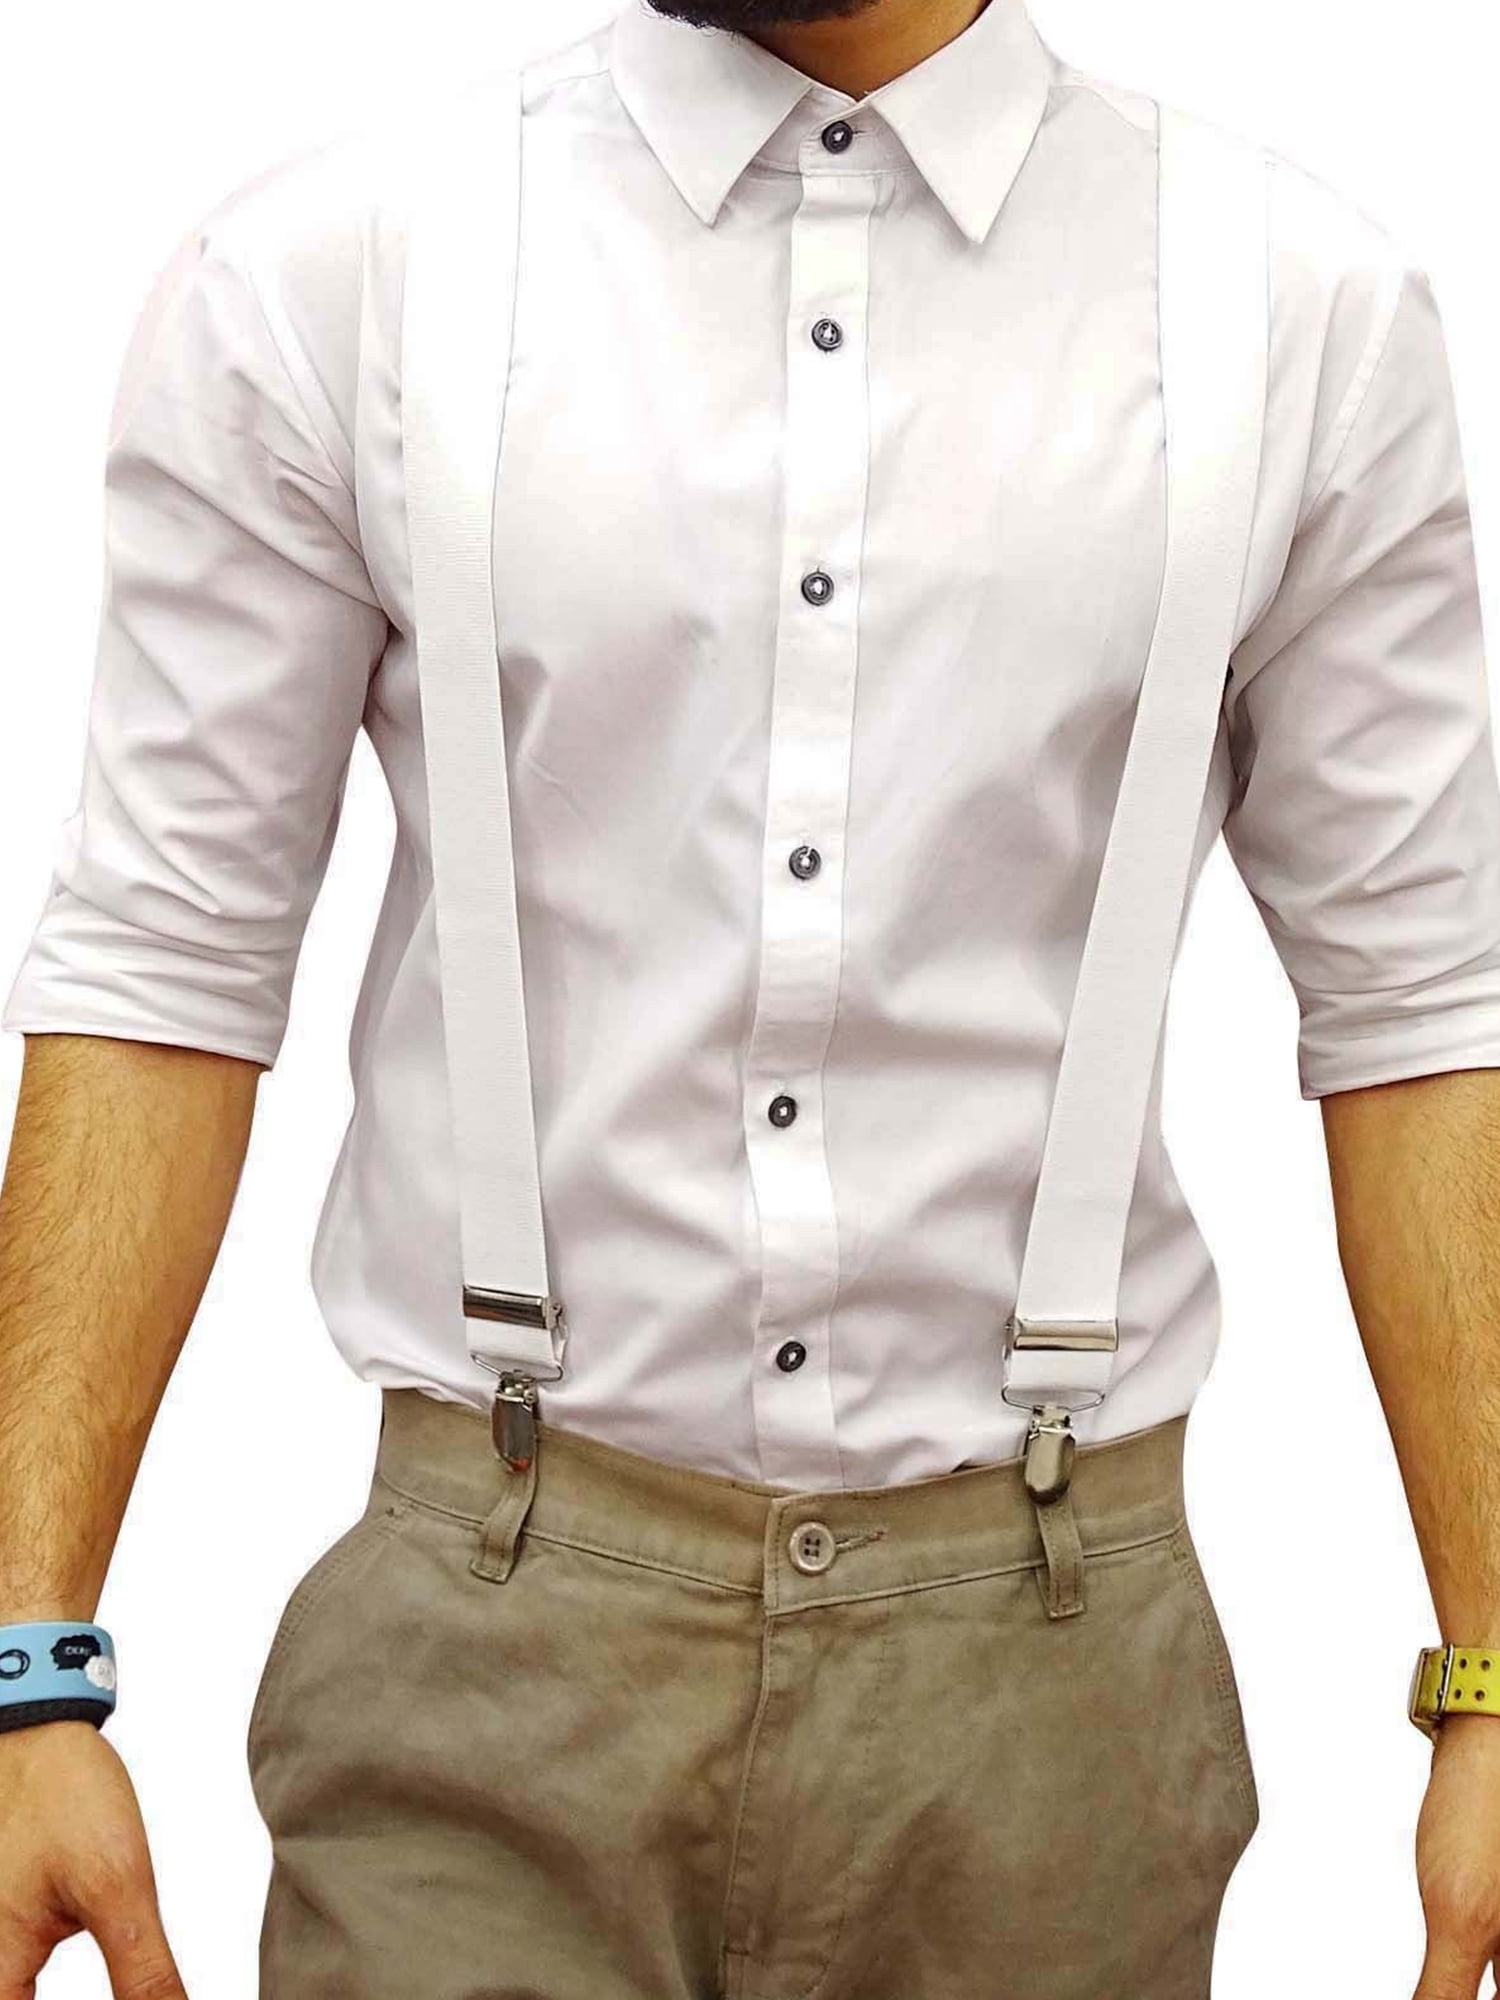 WWahuayuan Men's Shirt Stays Holder Unisex Shirt Stay Belt Super Shirt Lock  Belt For Formal at  Men's Clothing store